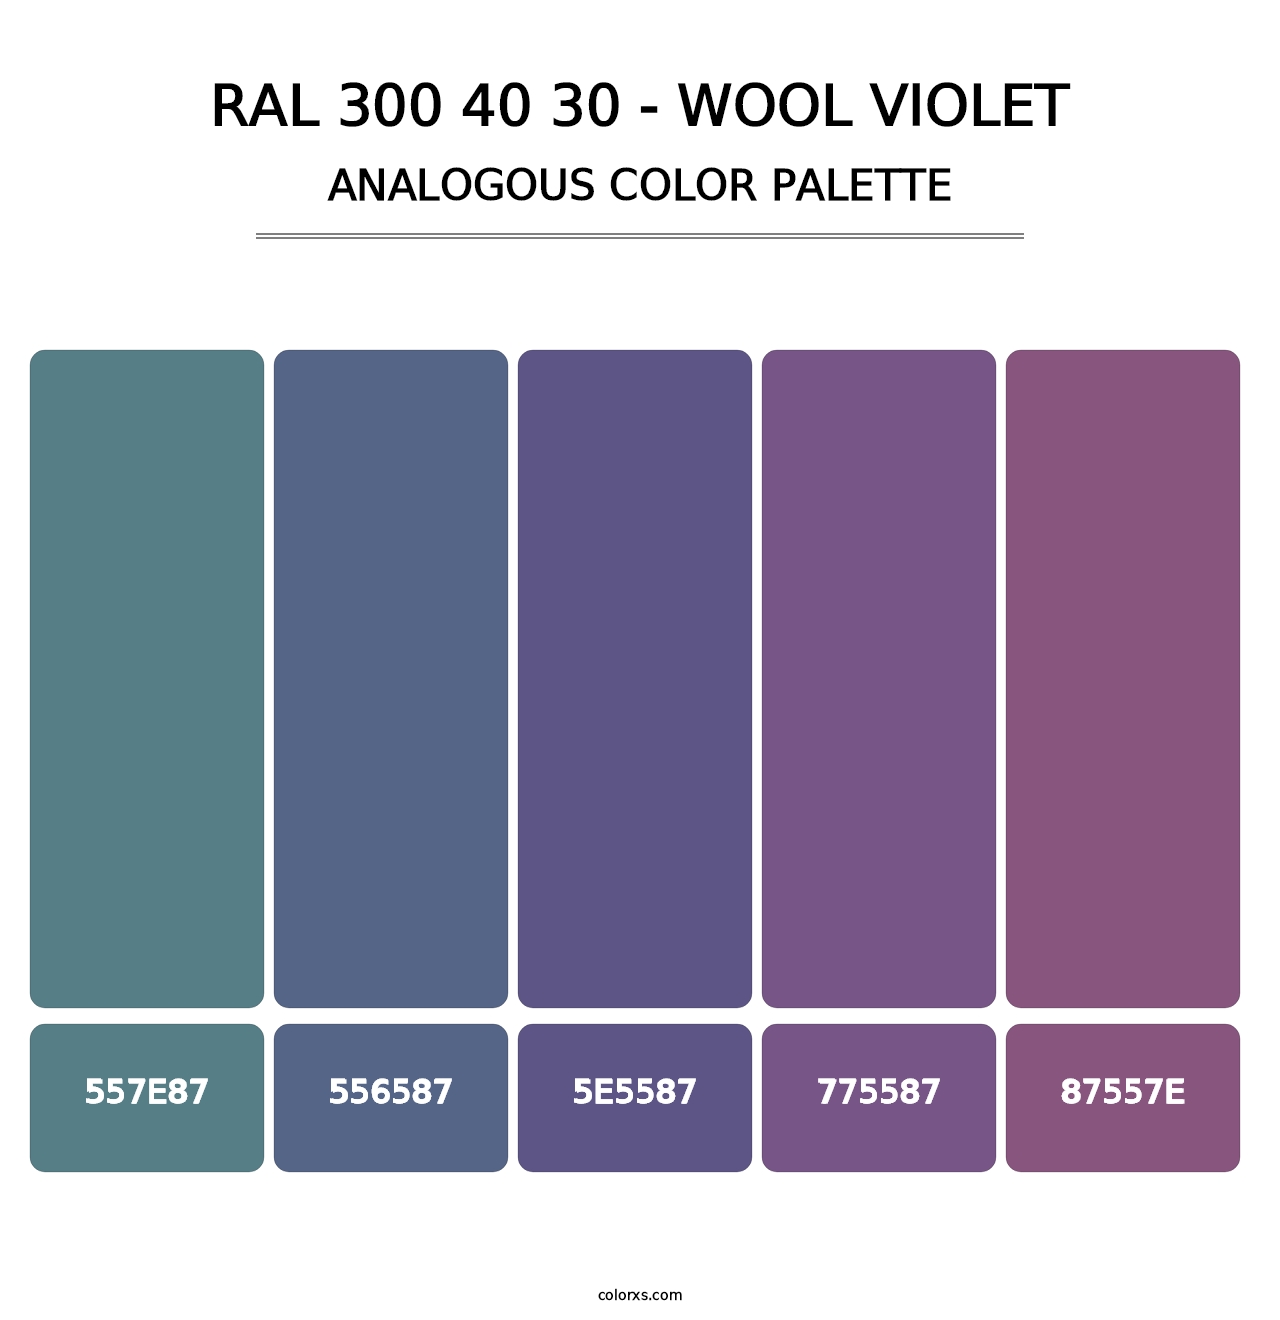 RAL 300 40 30 - Wool Violet - Analogous Color Palette